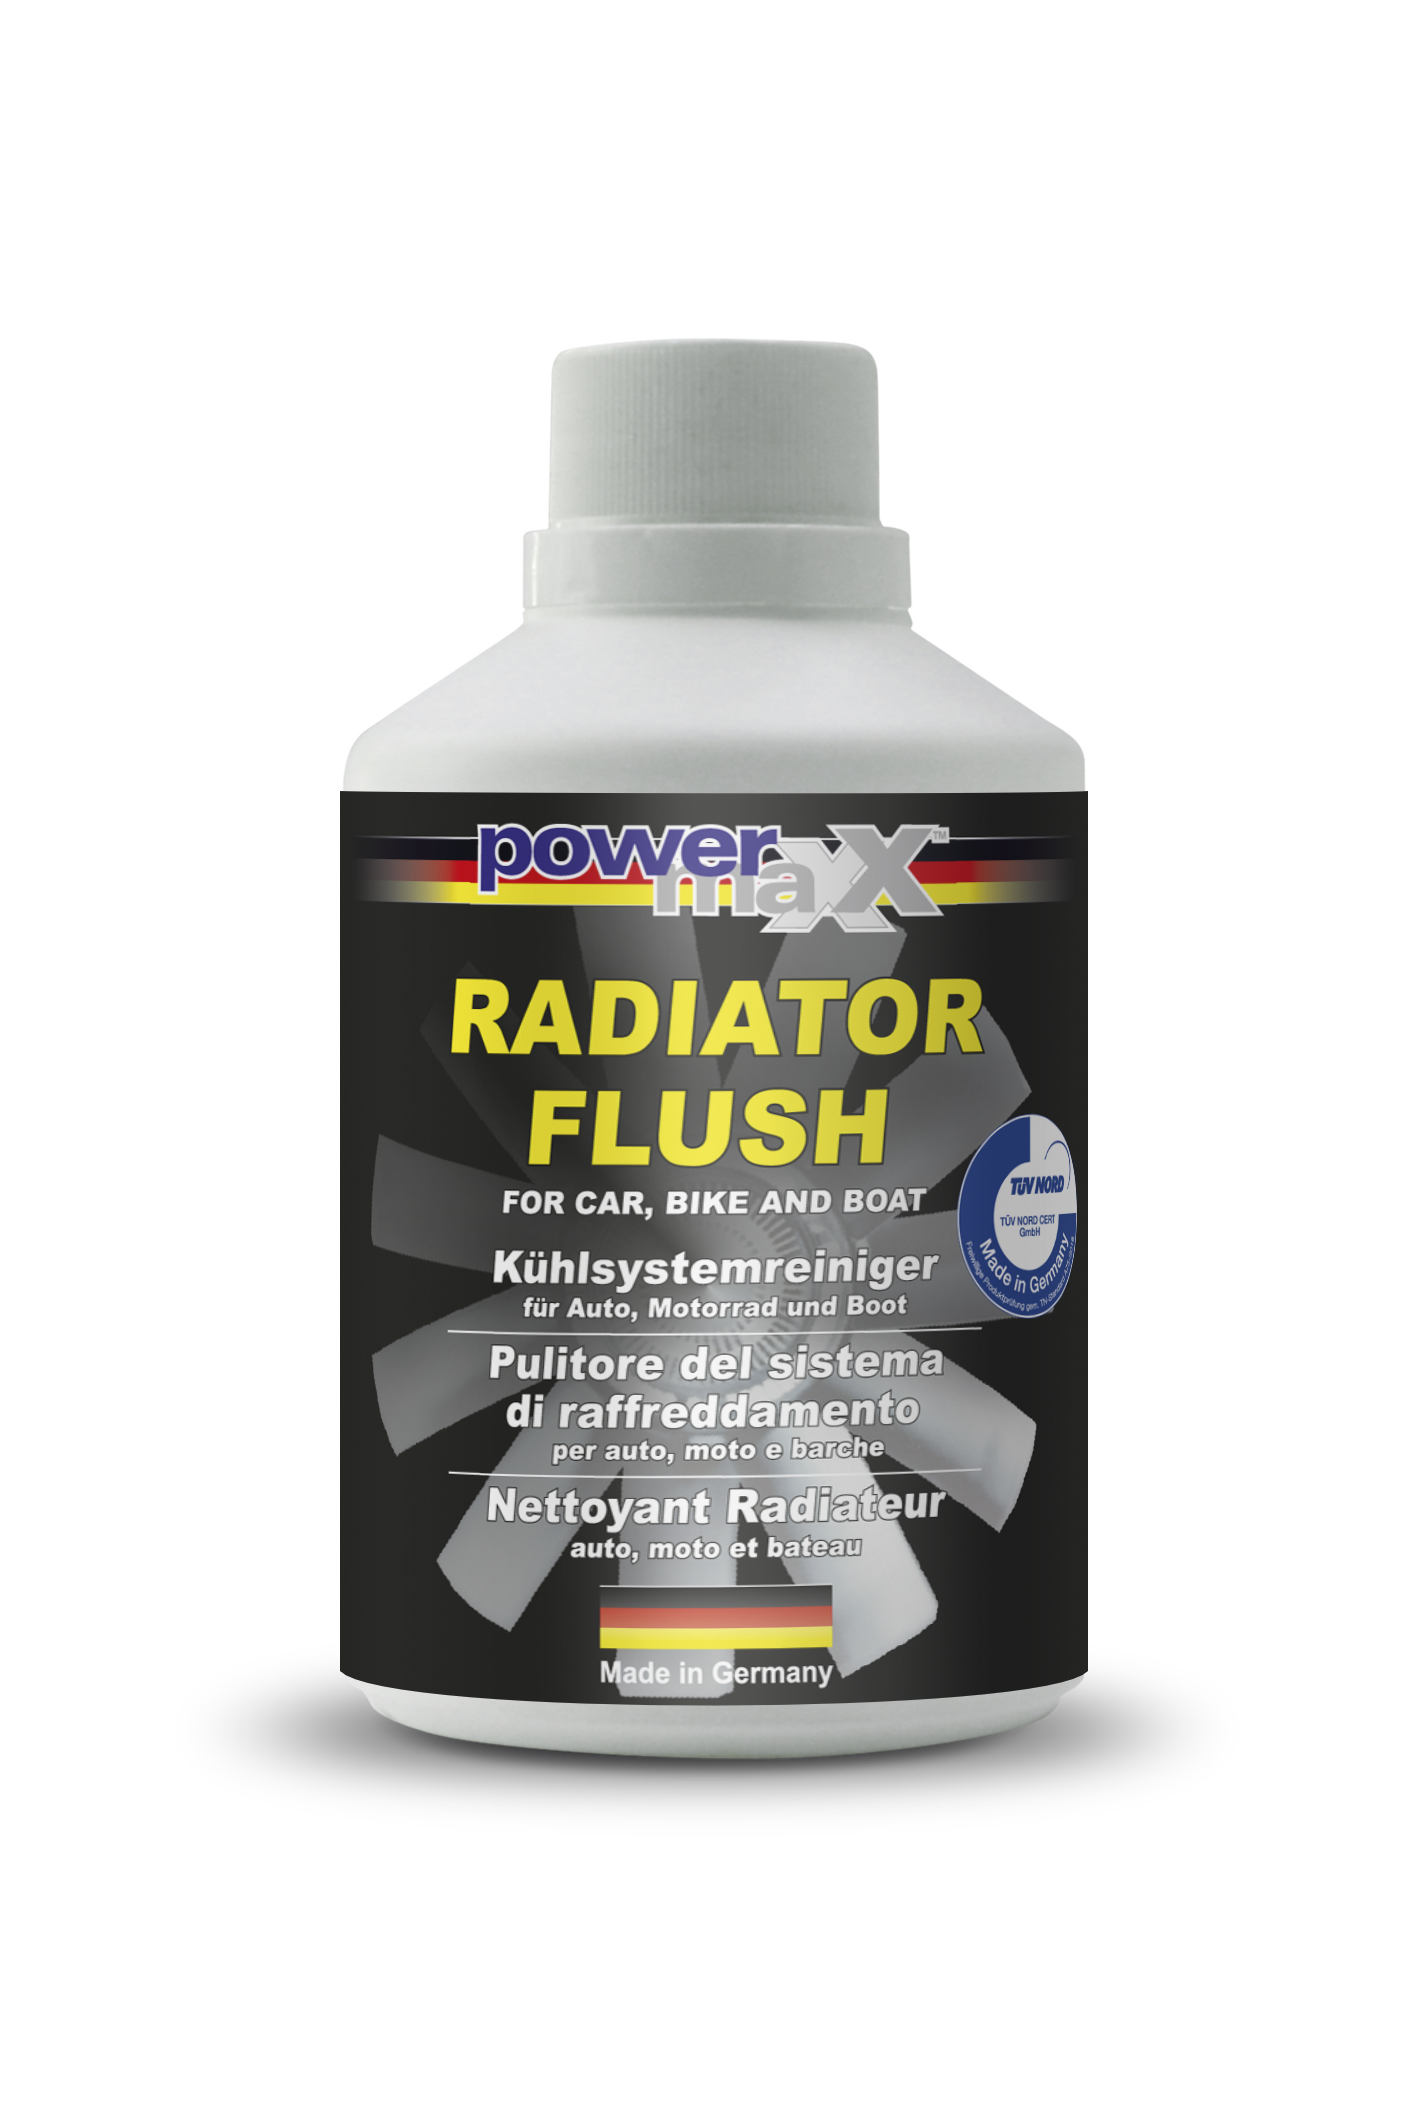 Radiator Flush - Liquid Performance